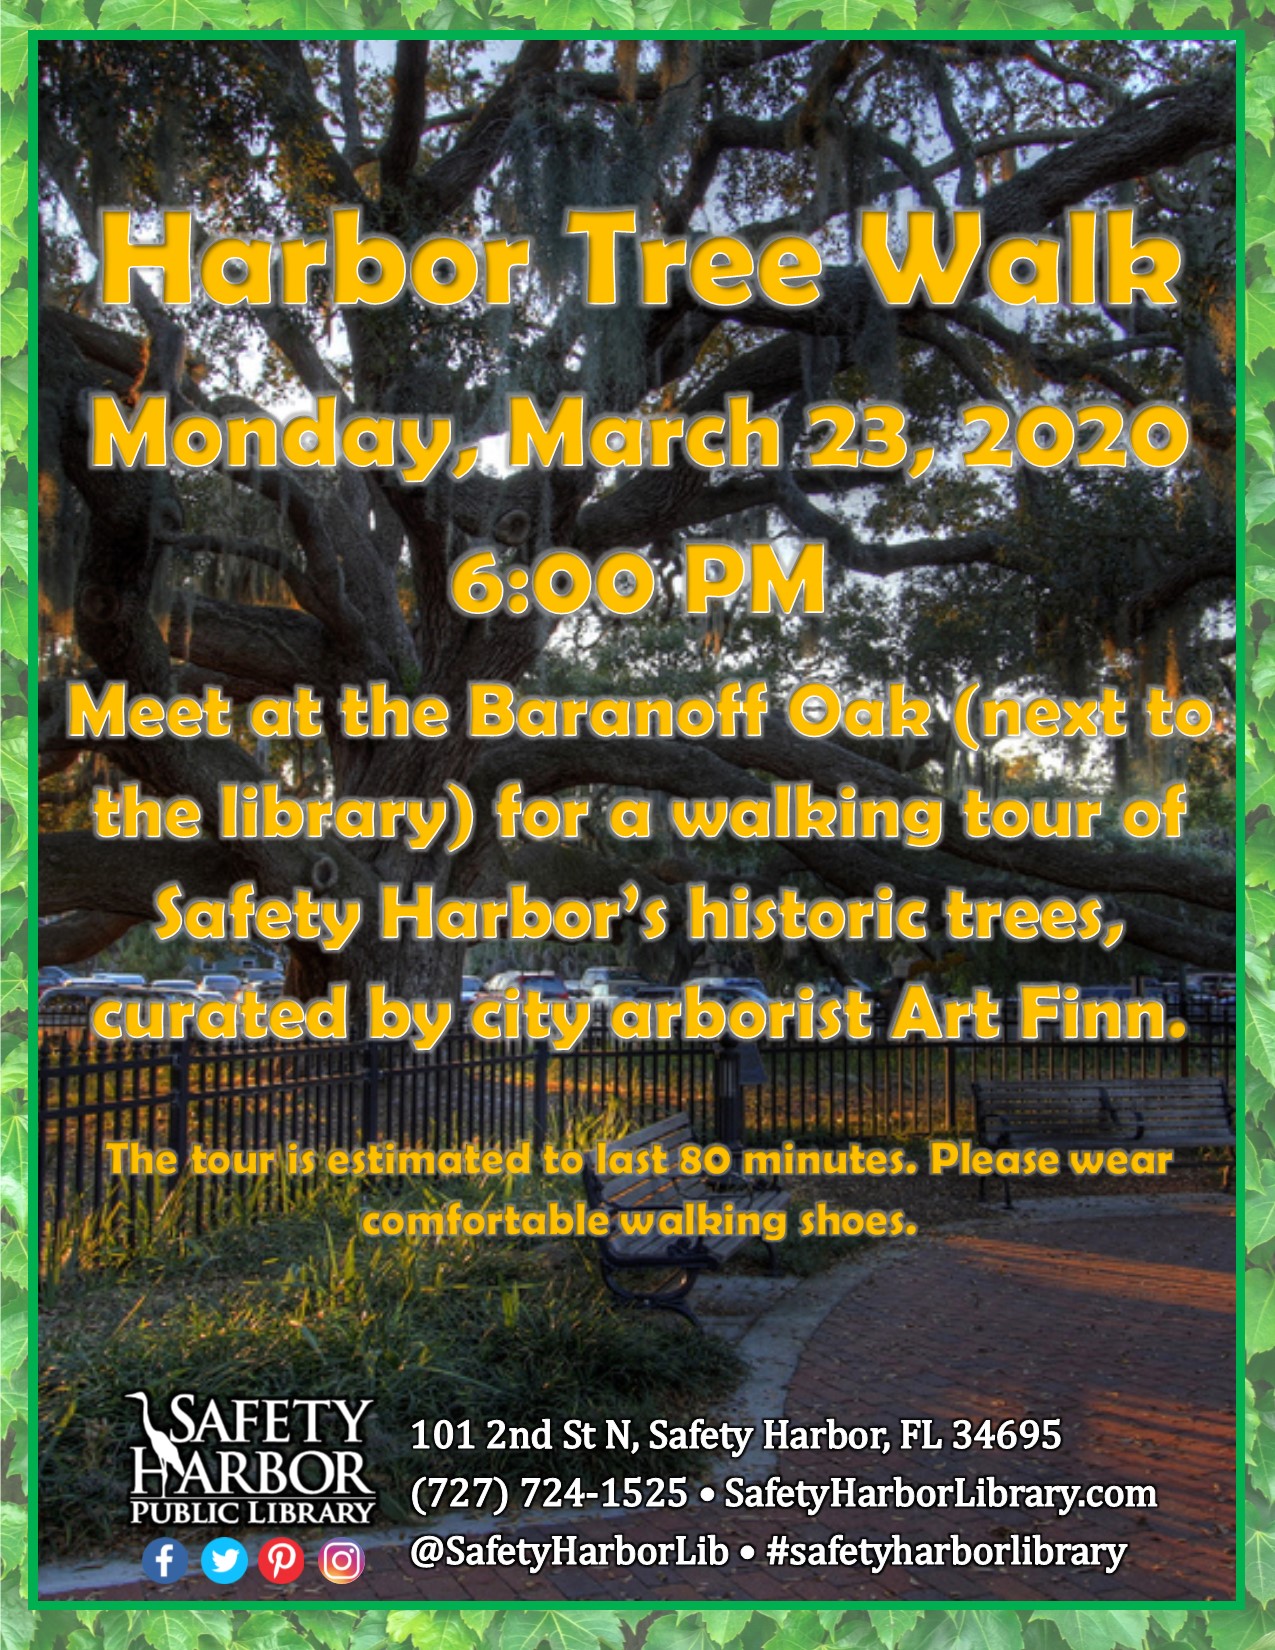 Flyer for Harbor Tree Walk